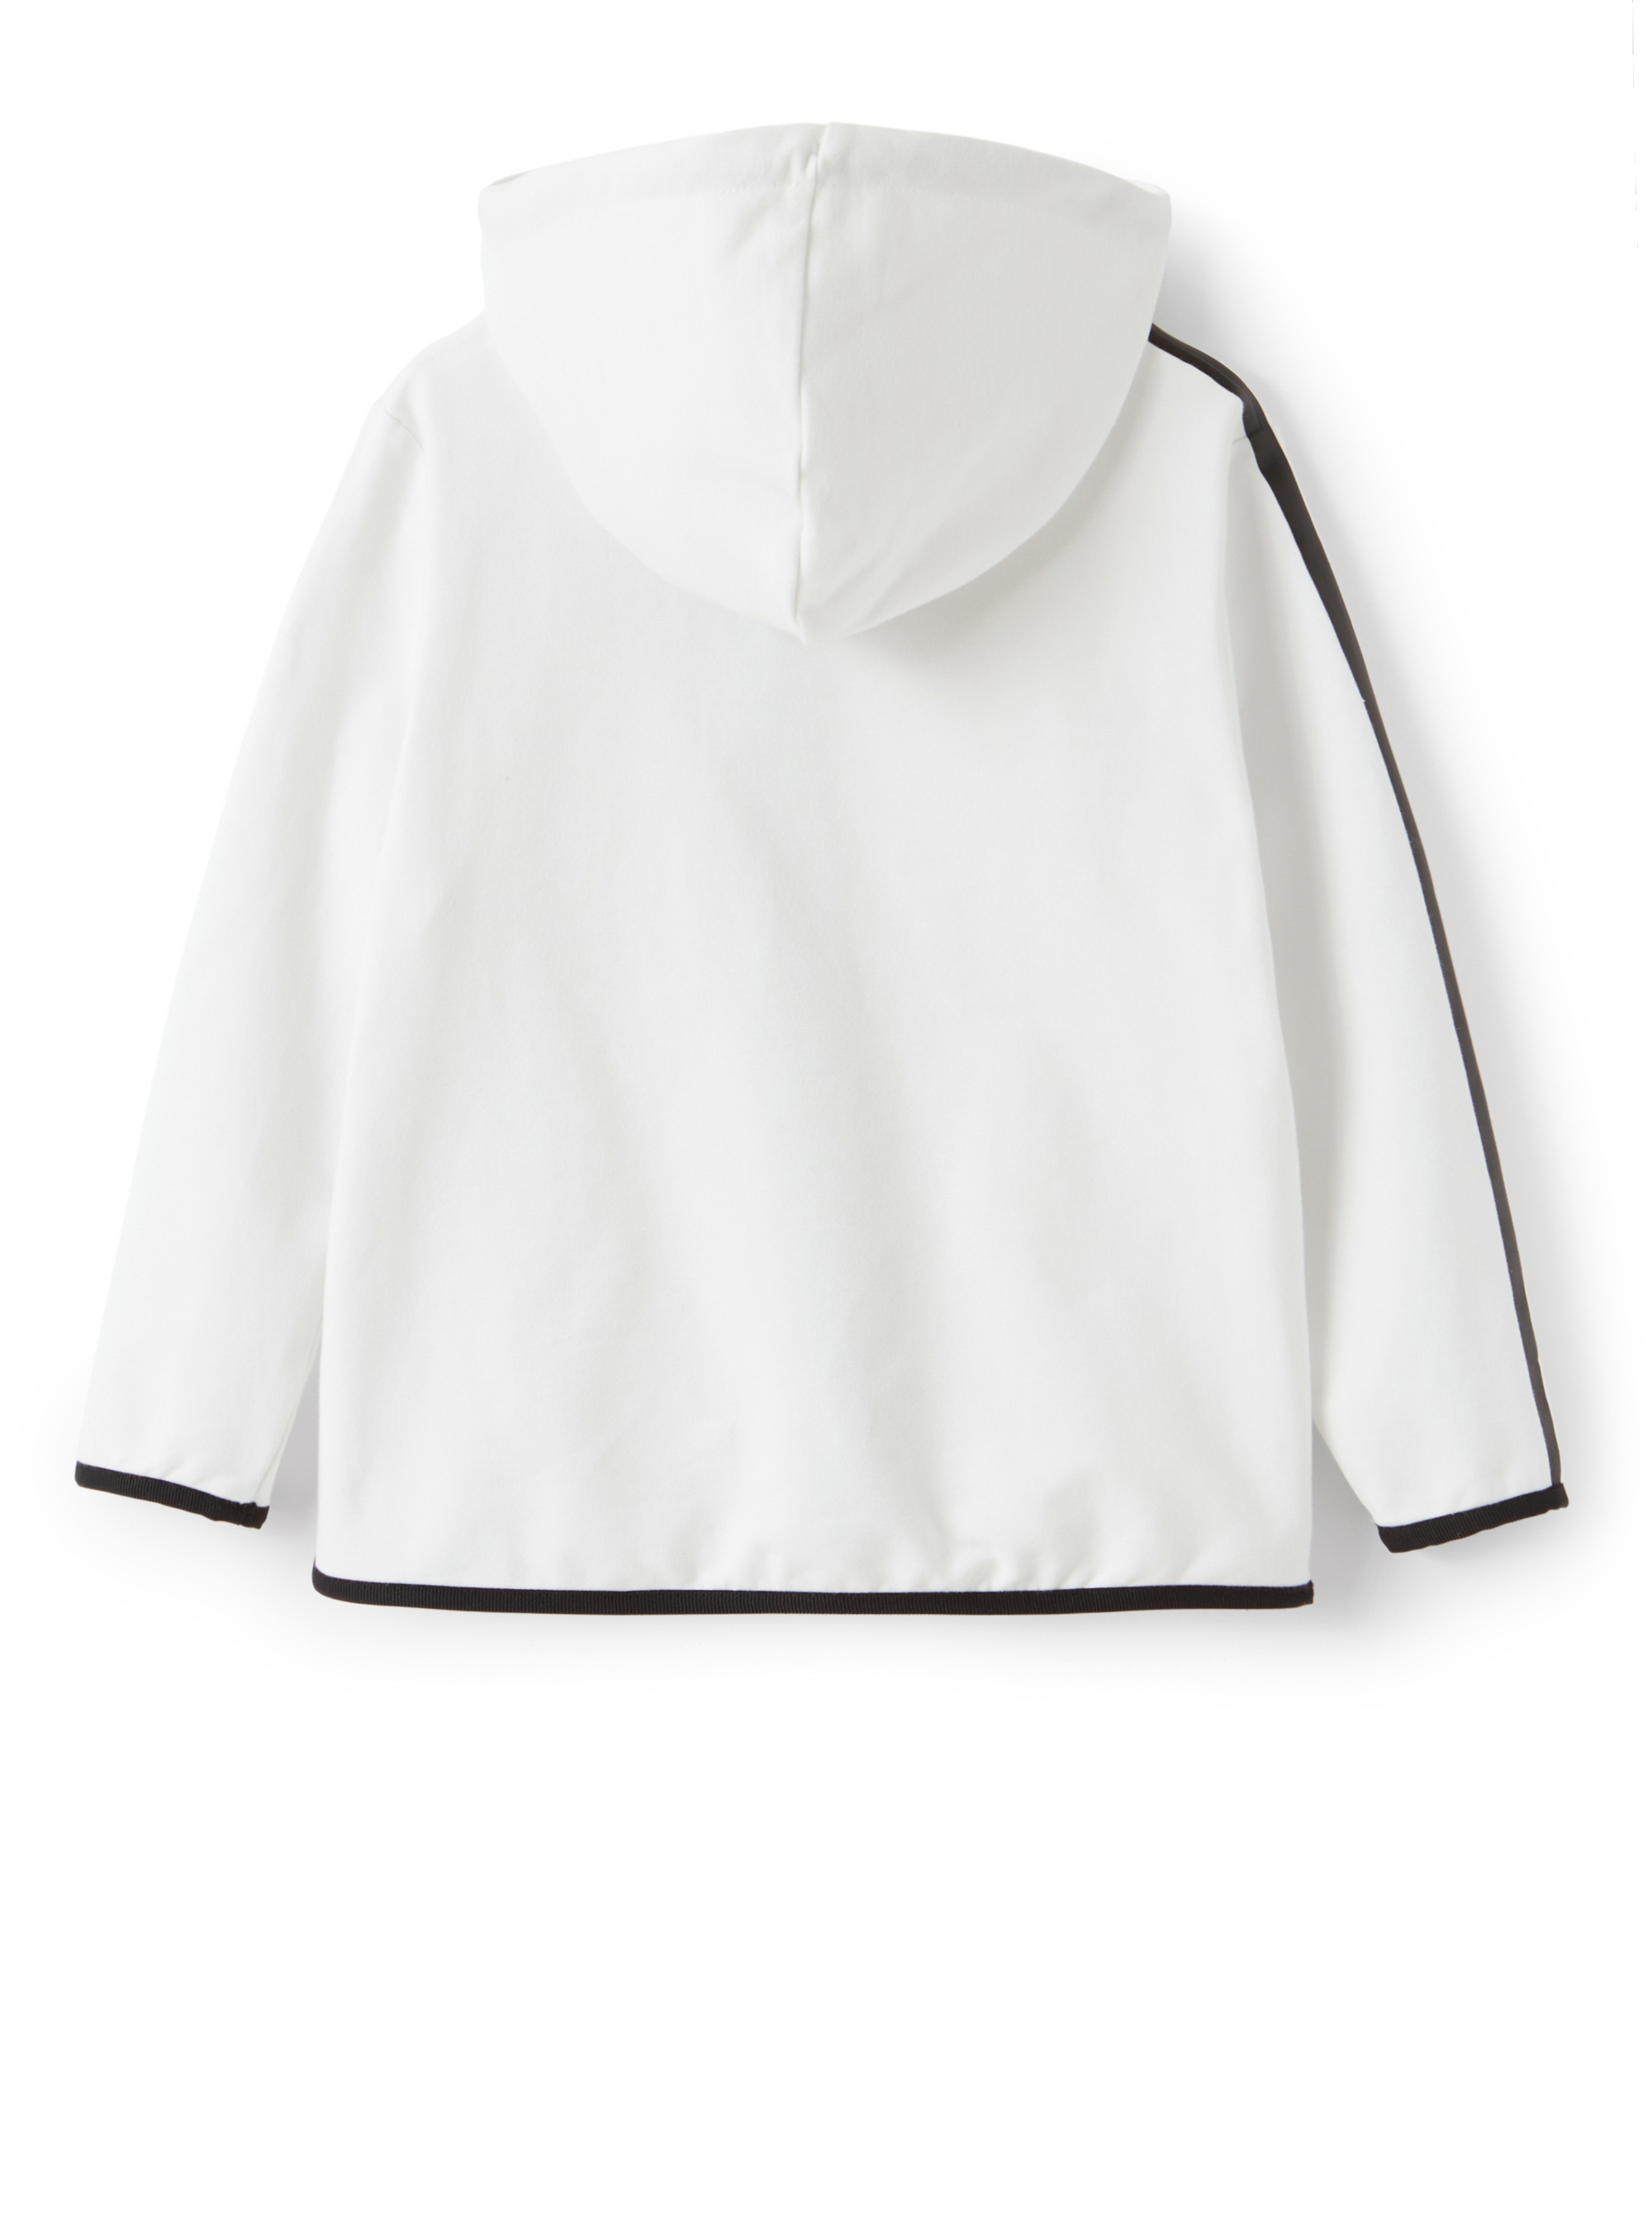 White sweatshirt with black taping - White | Il Gufo